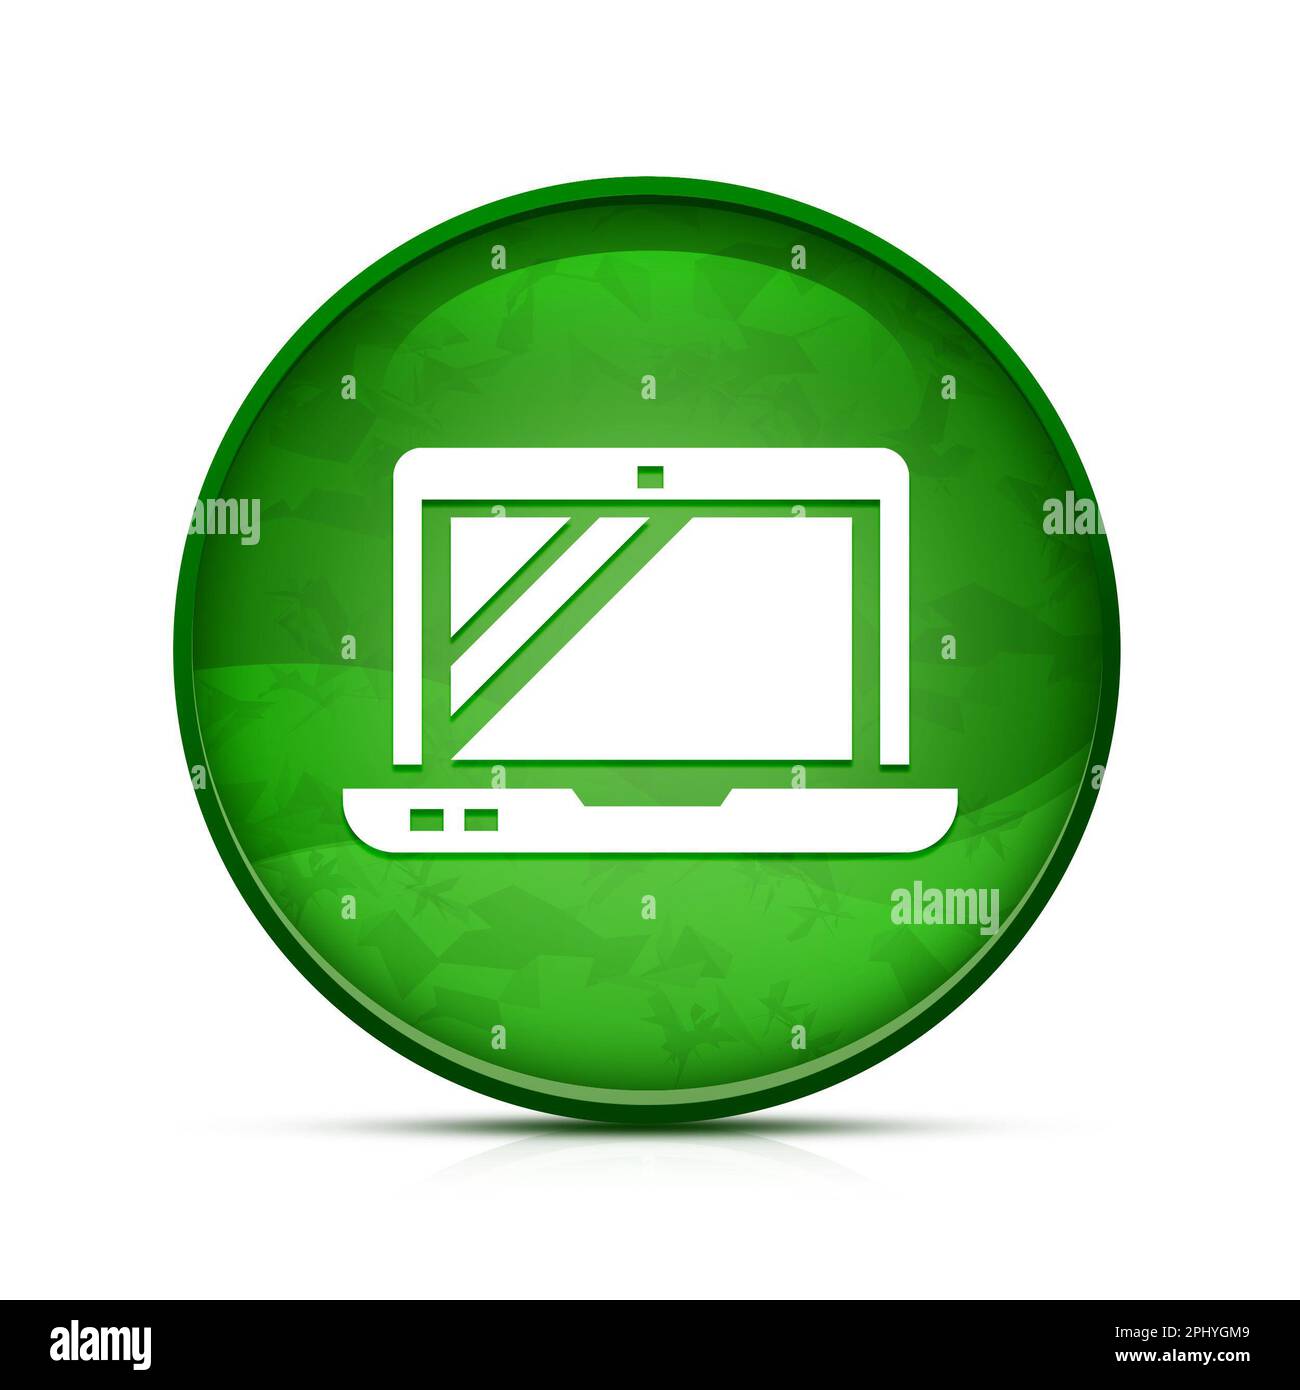 Technical skill icon on classy splash green round button Stock Photo